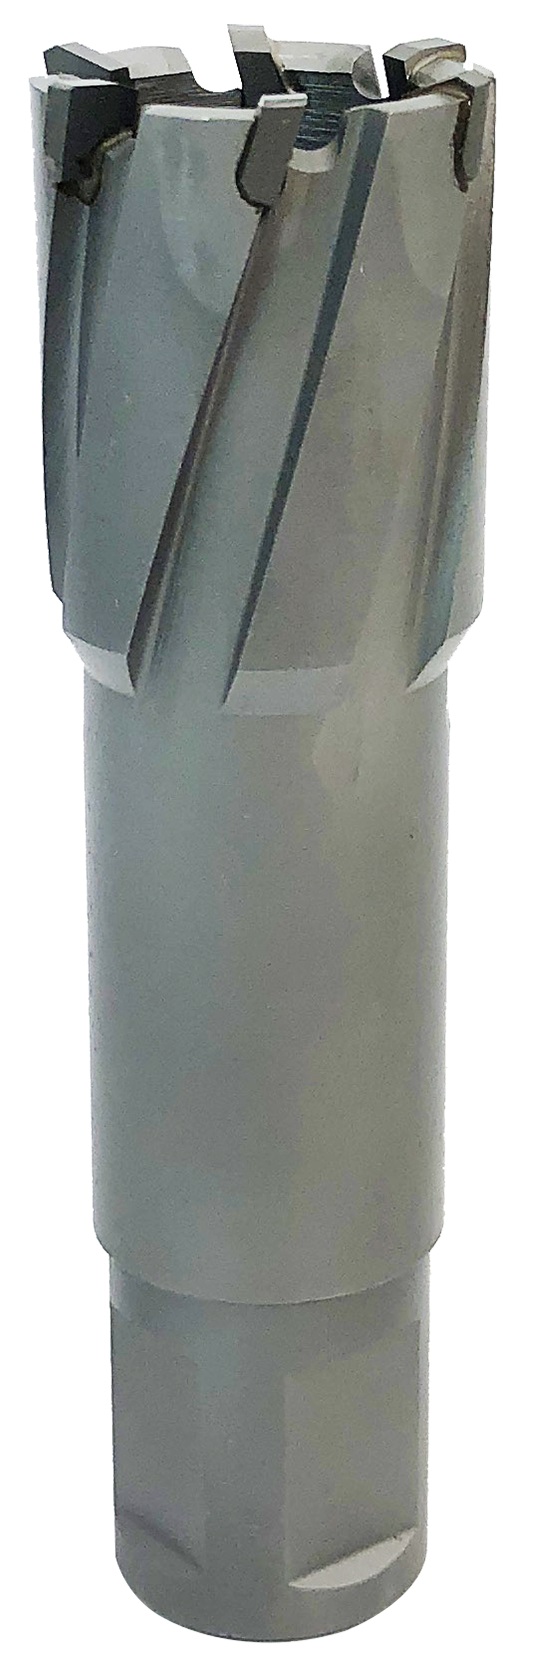 Корончатое сверло (фреза кольцевая) Ø18 L=55/92 мм №310 WELDON19 TCT (твердый сплав) ТМ ПрофОснастка